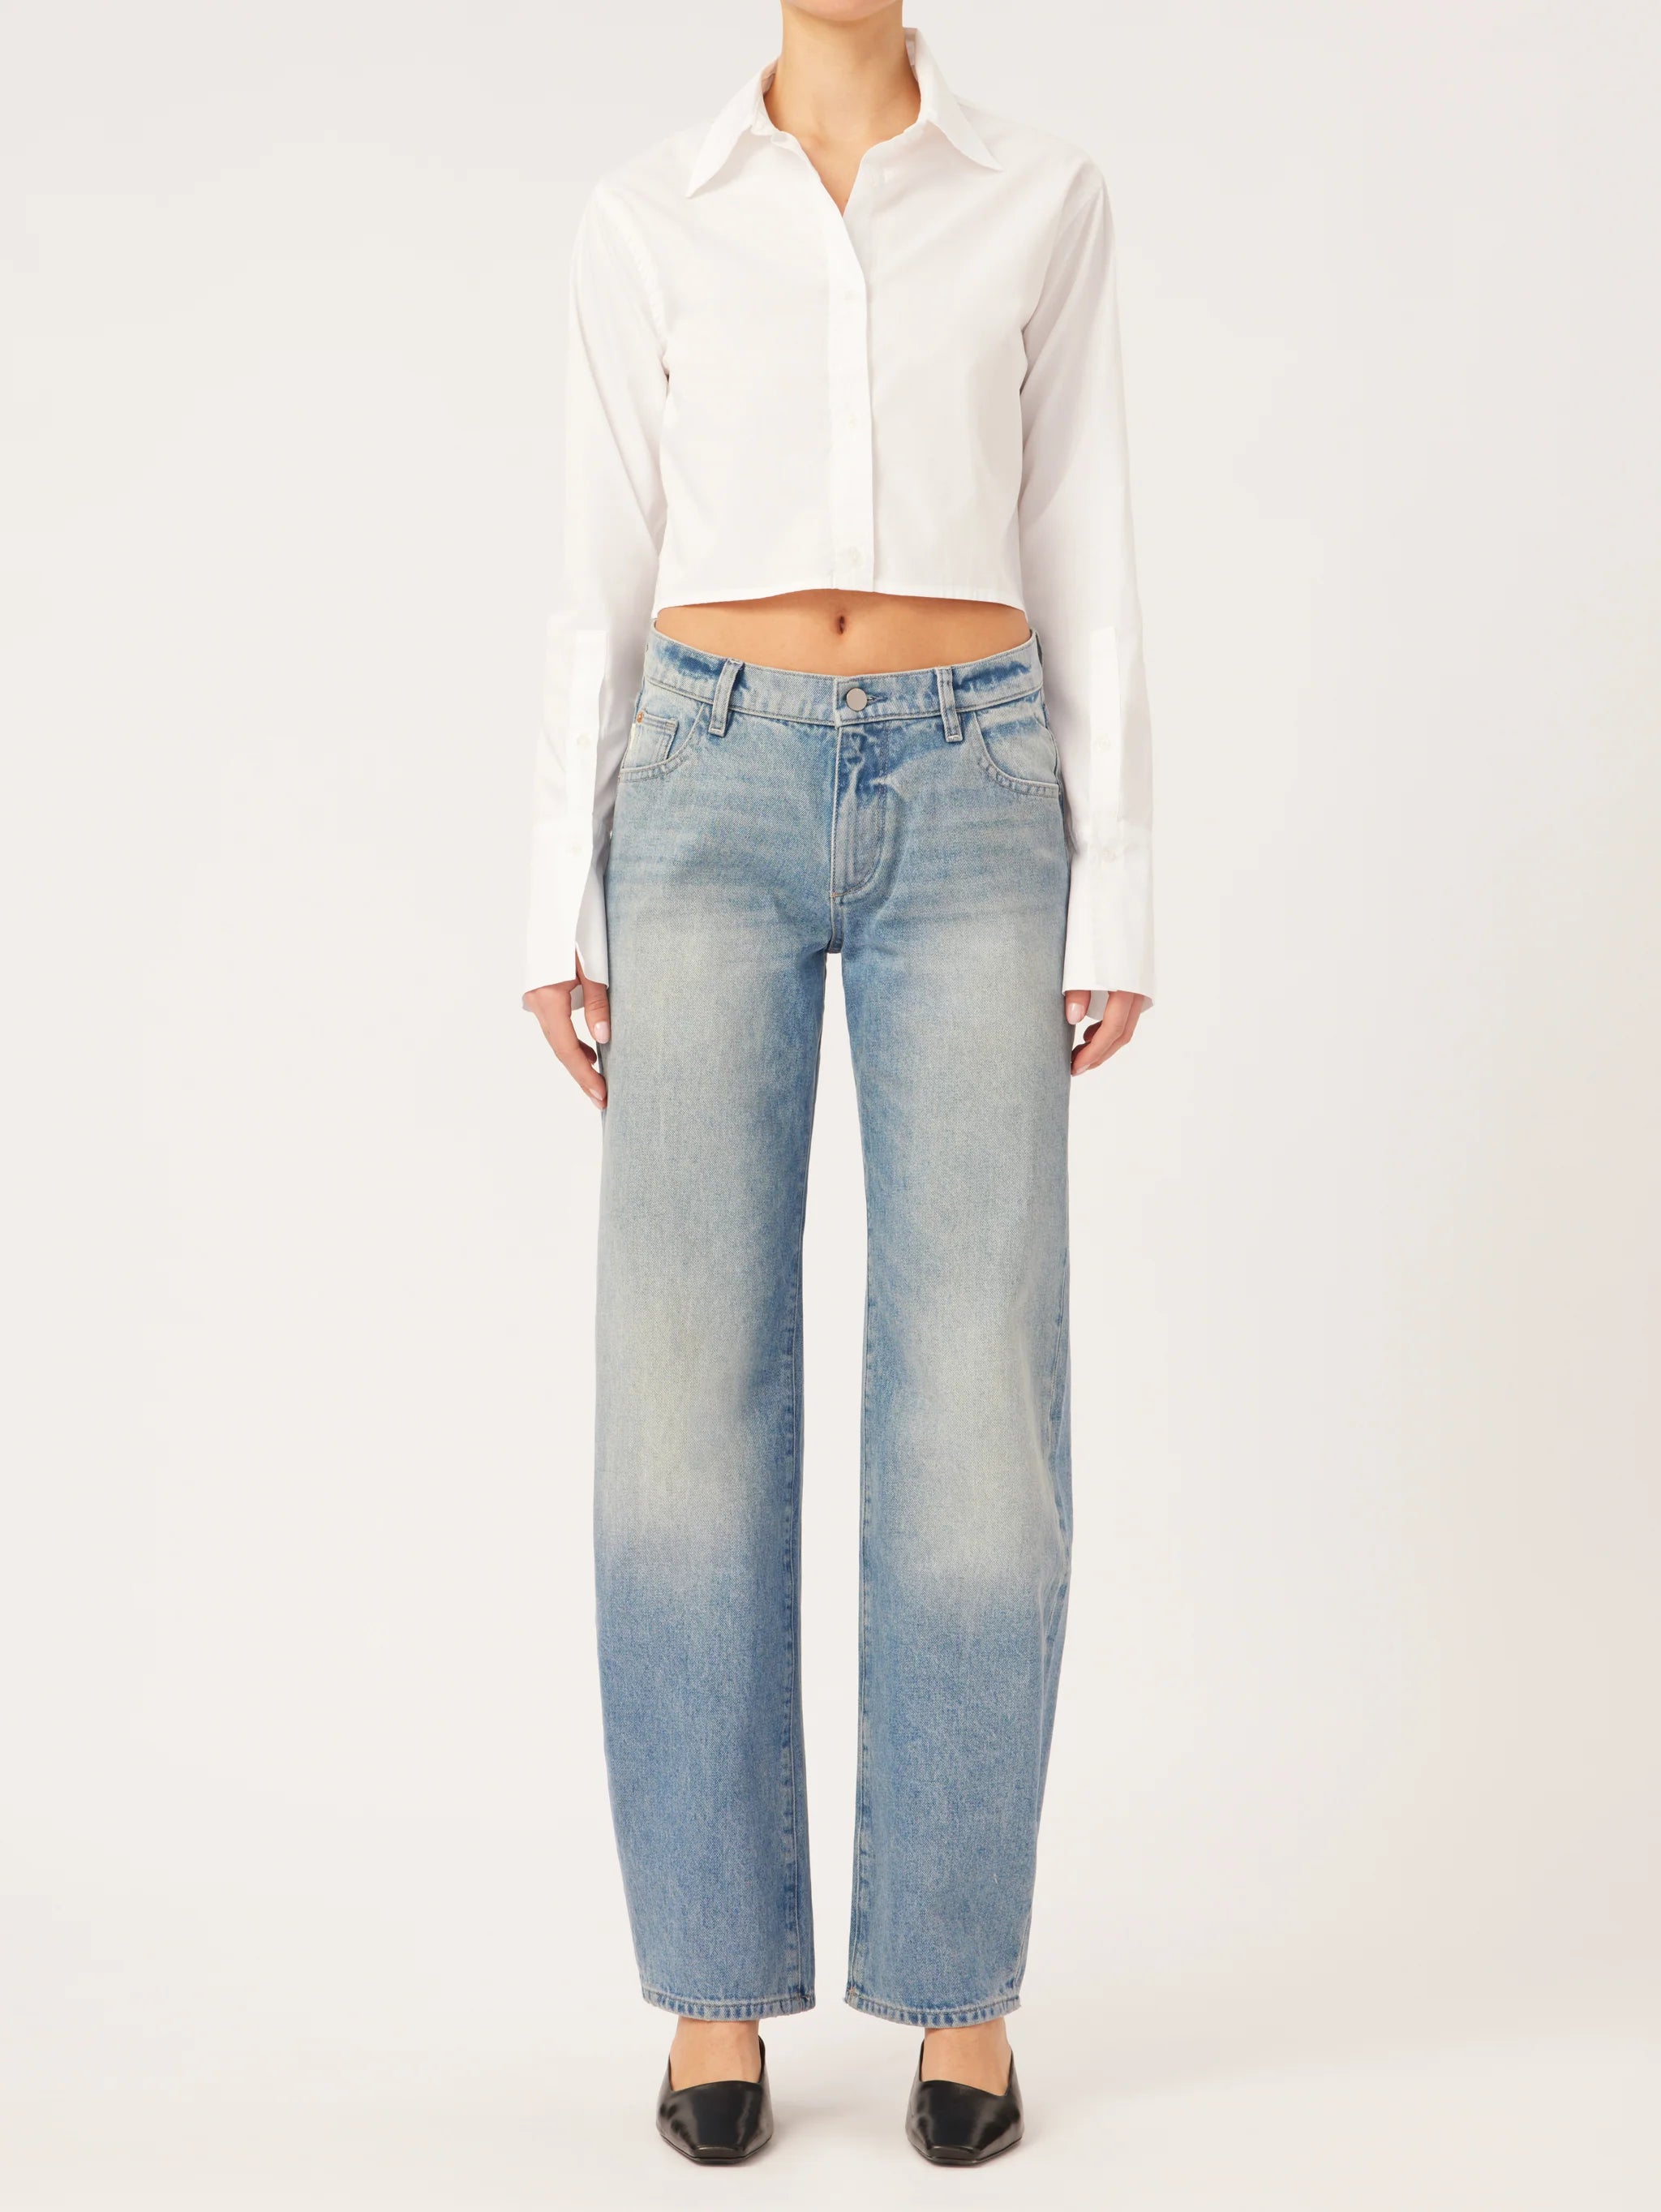 DL1961 Ilia Barrel Jeans - Aged Mid